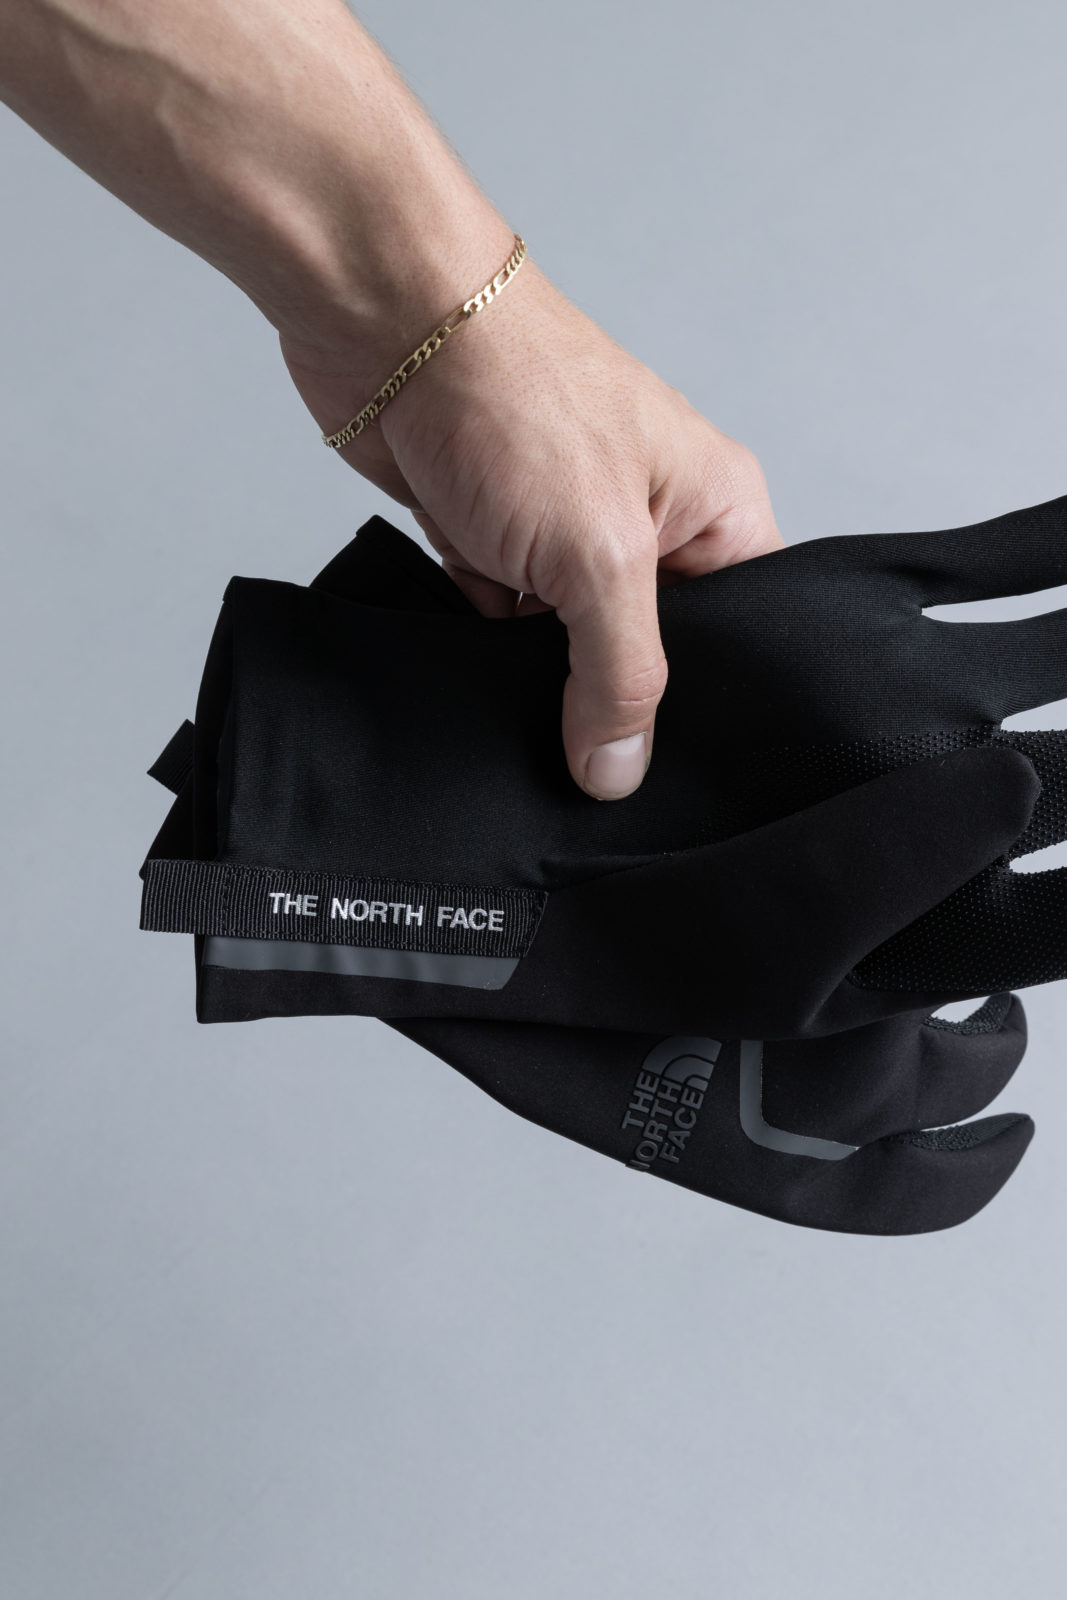 north face close fit glove